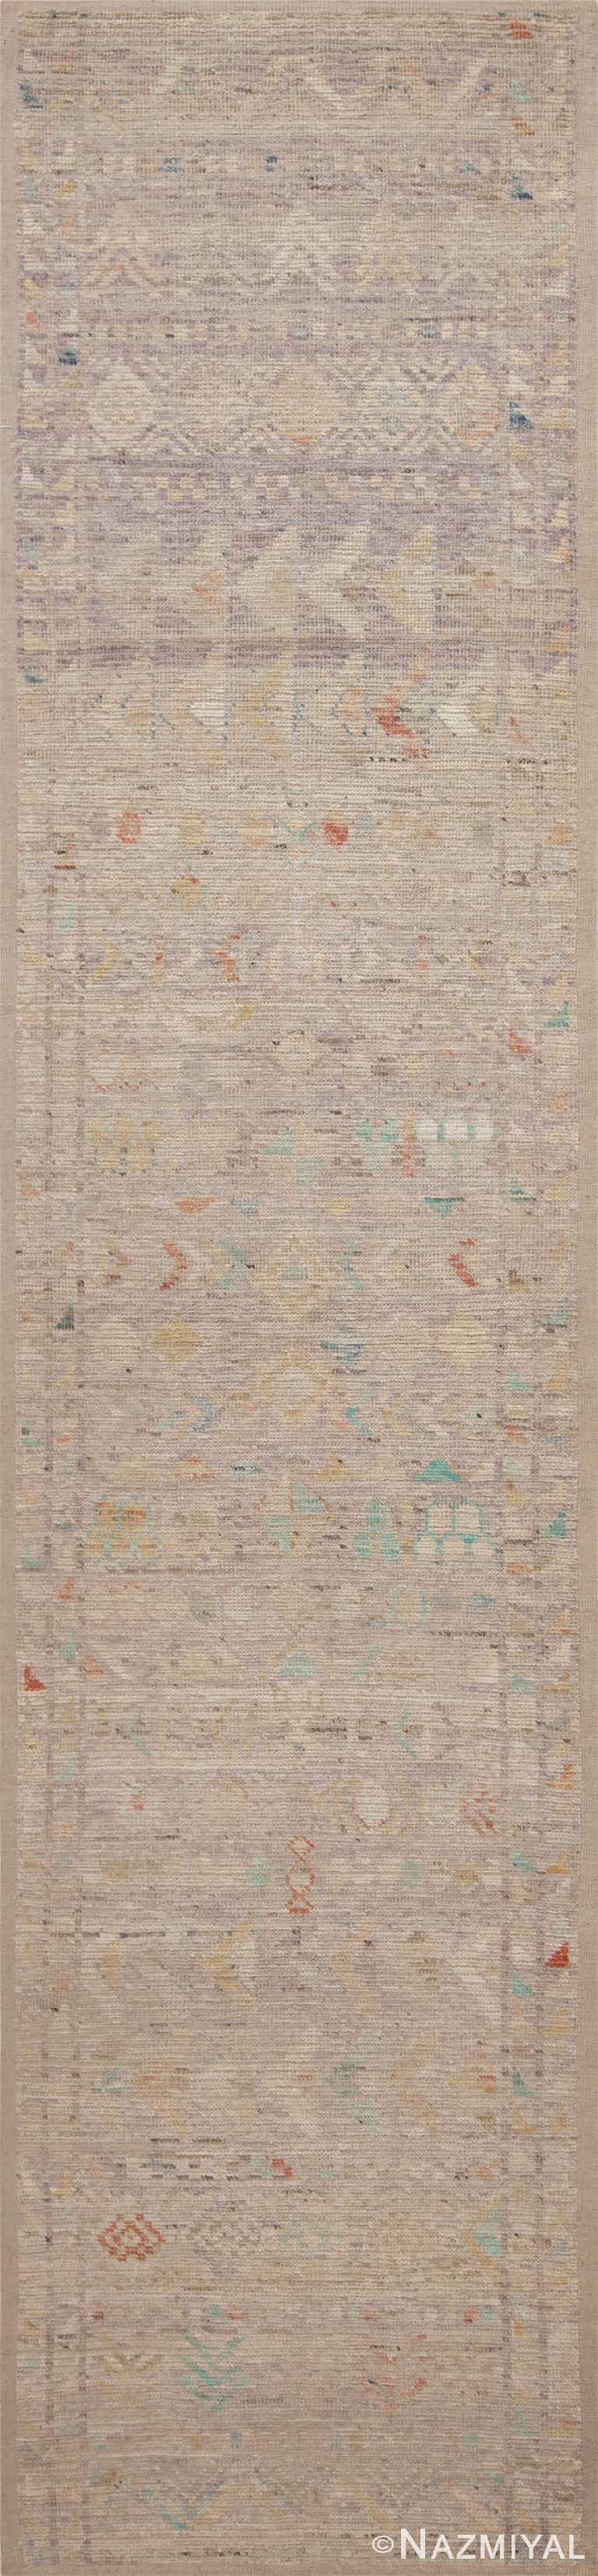 Tribal Geometric Soft Neutral Pastel Color Modern Hallway Runner Rug 11051 by Nazmiyal Antique Rugs